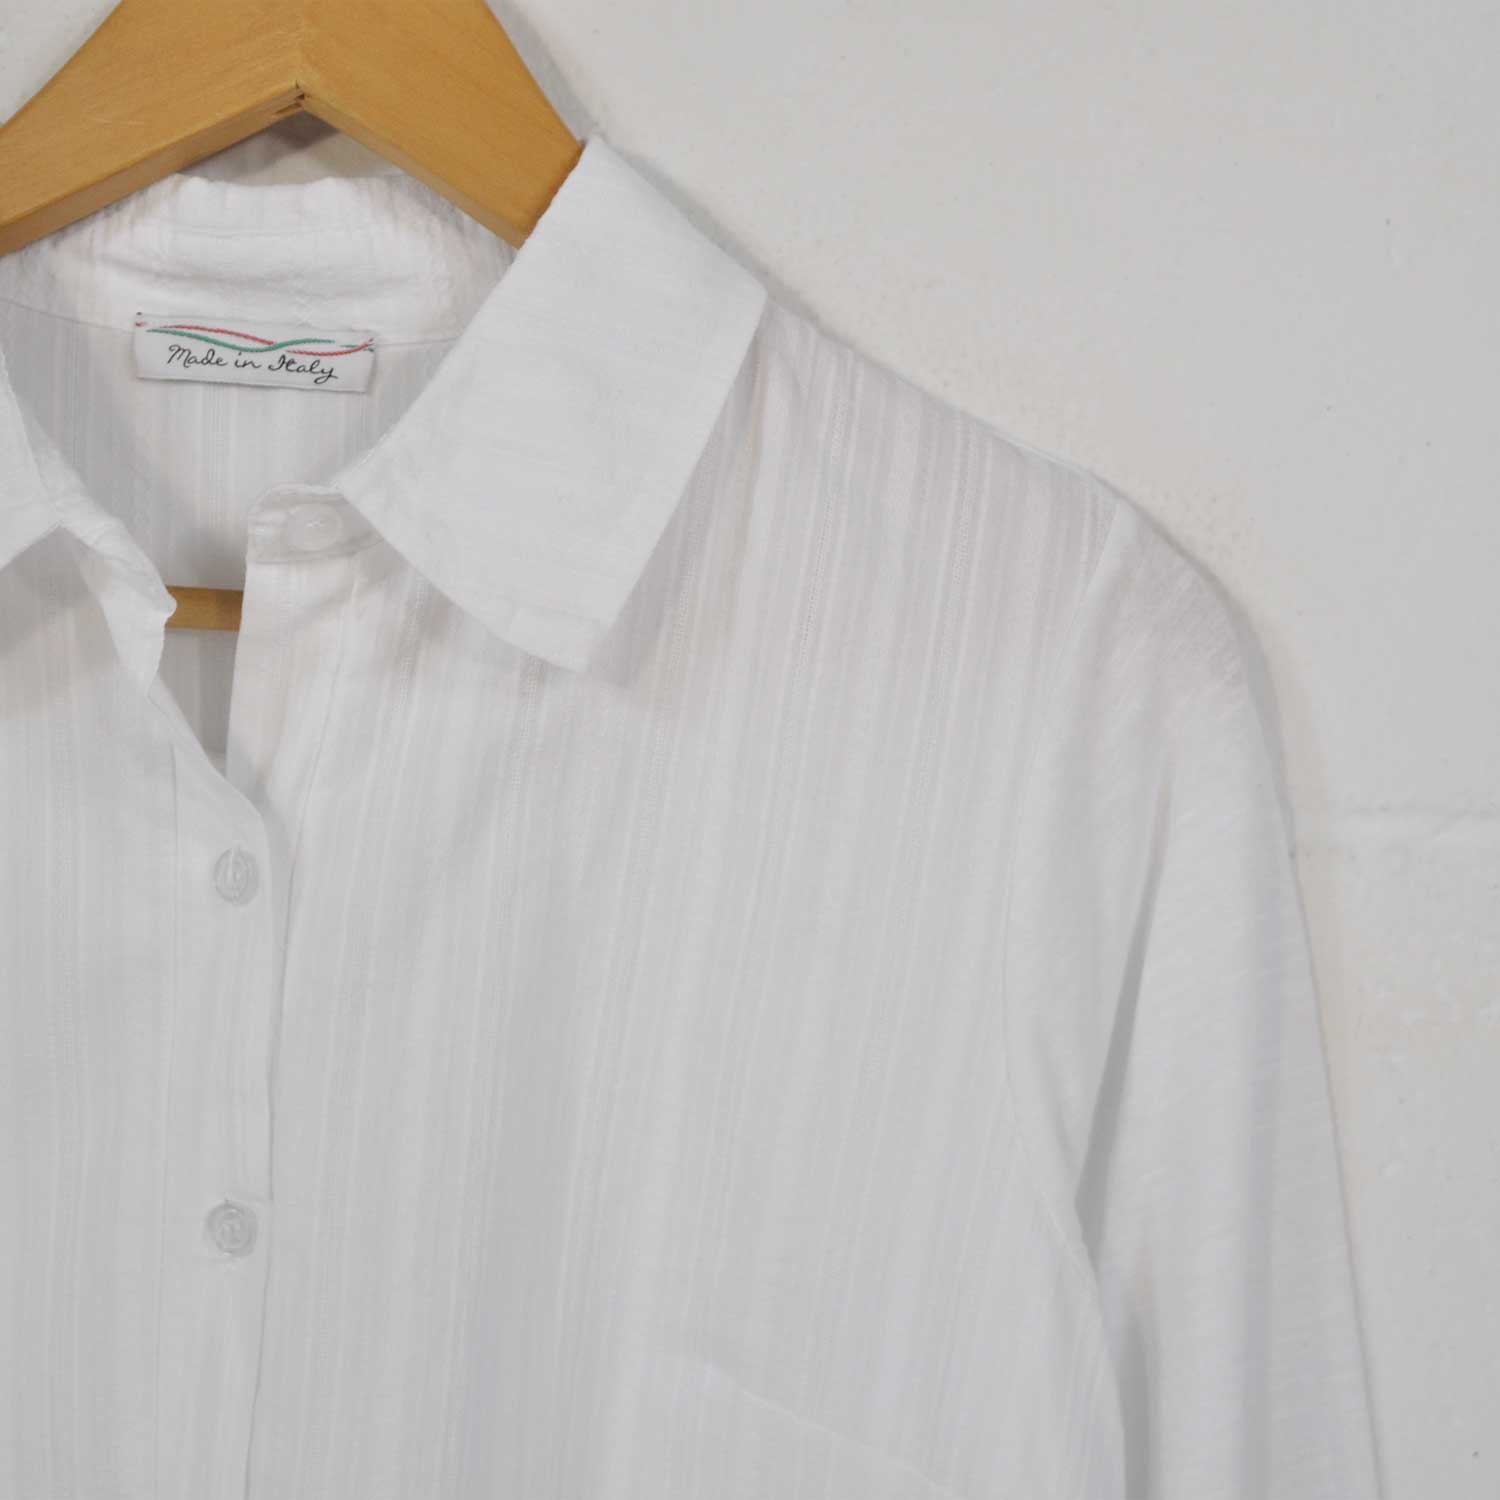 White texture shirt